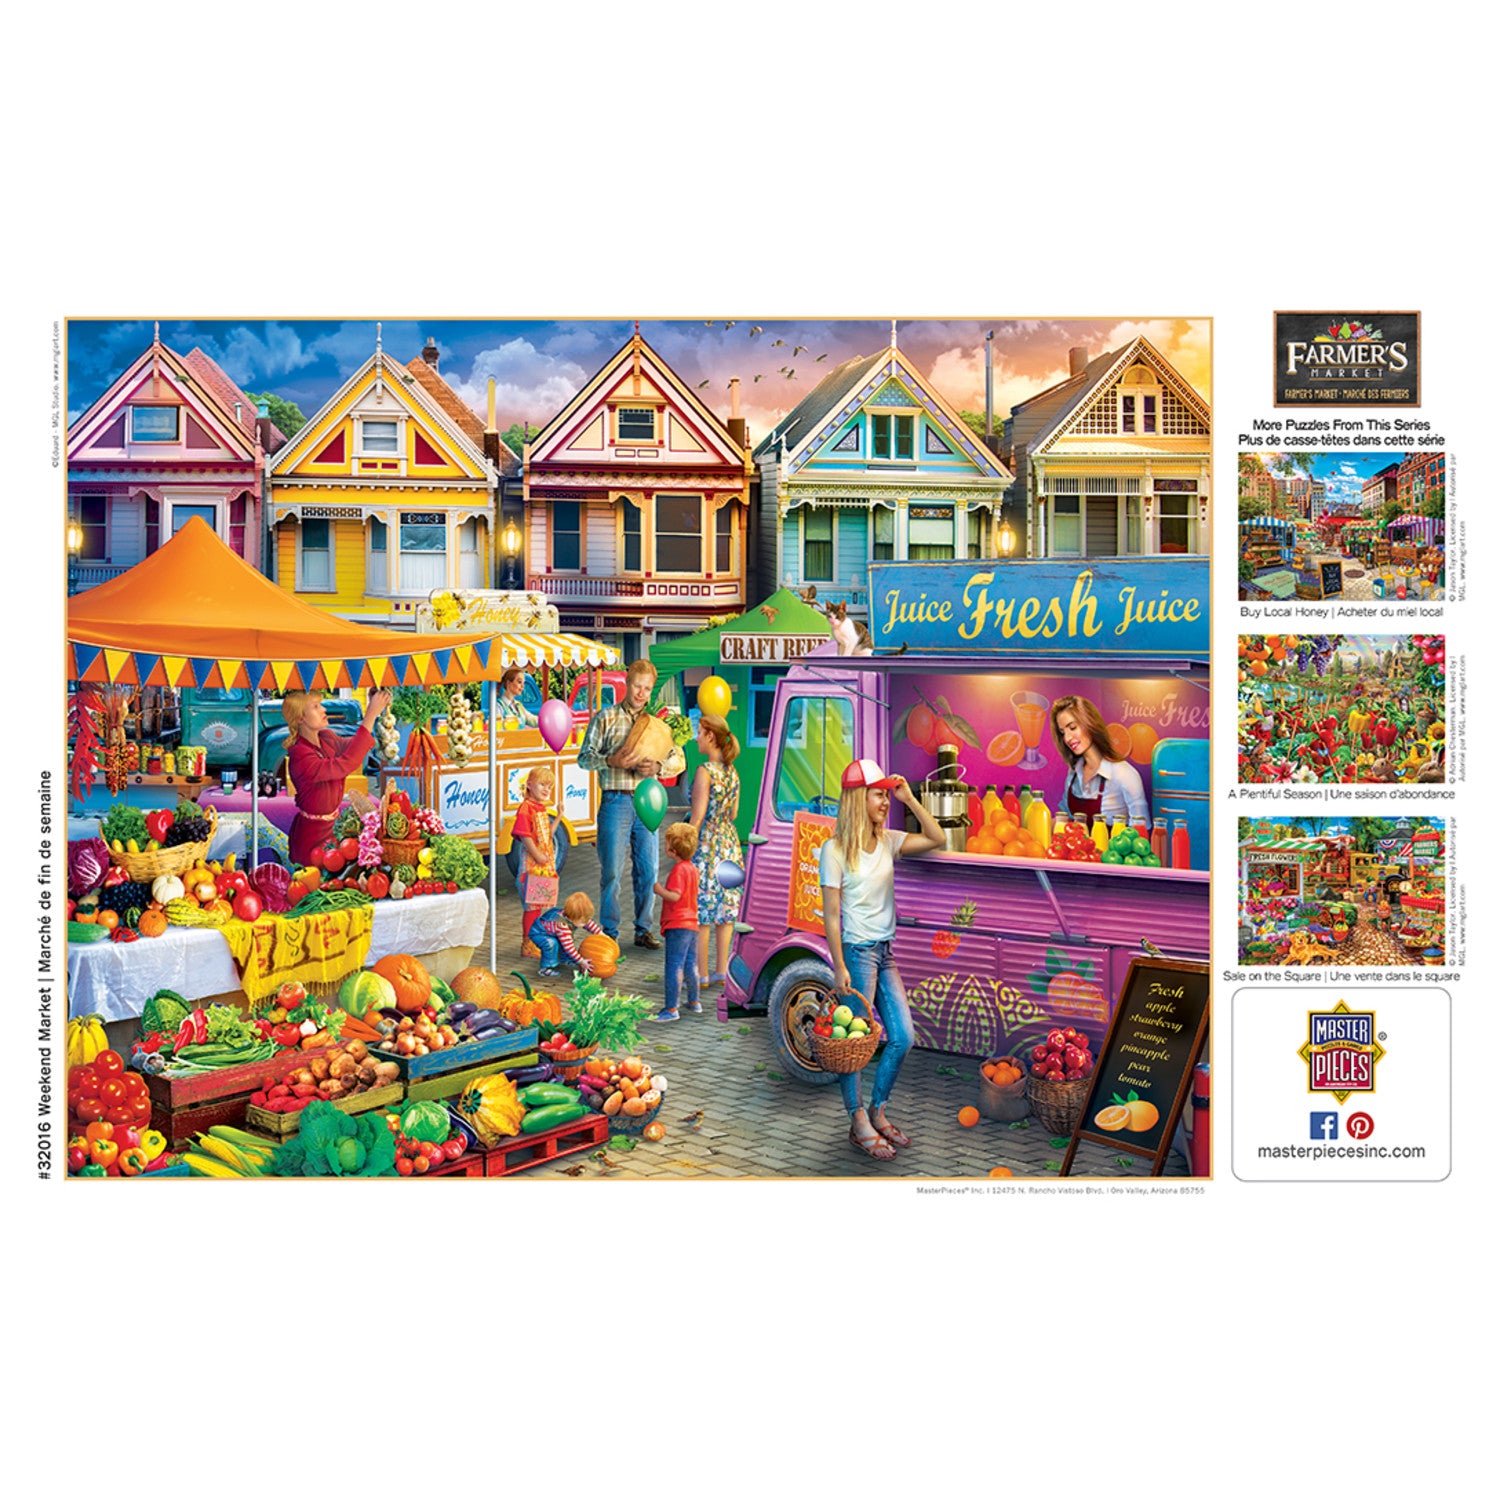 Farmer's Market - Weekend Market 750 Piece Puzzle